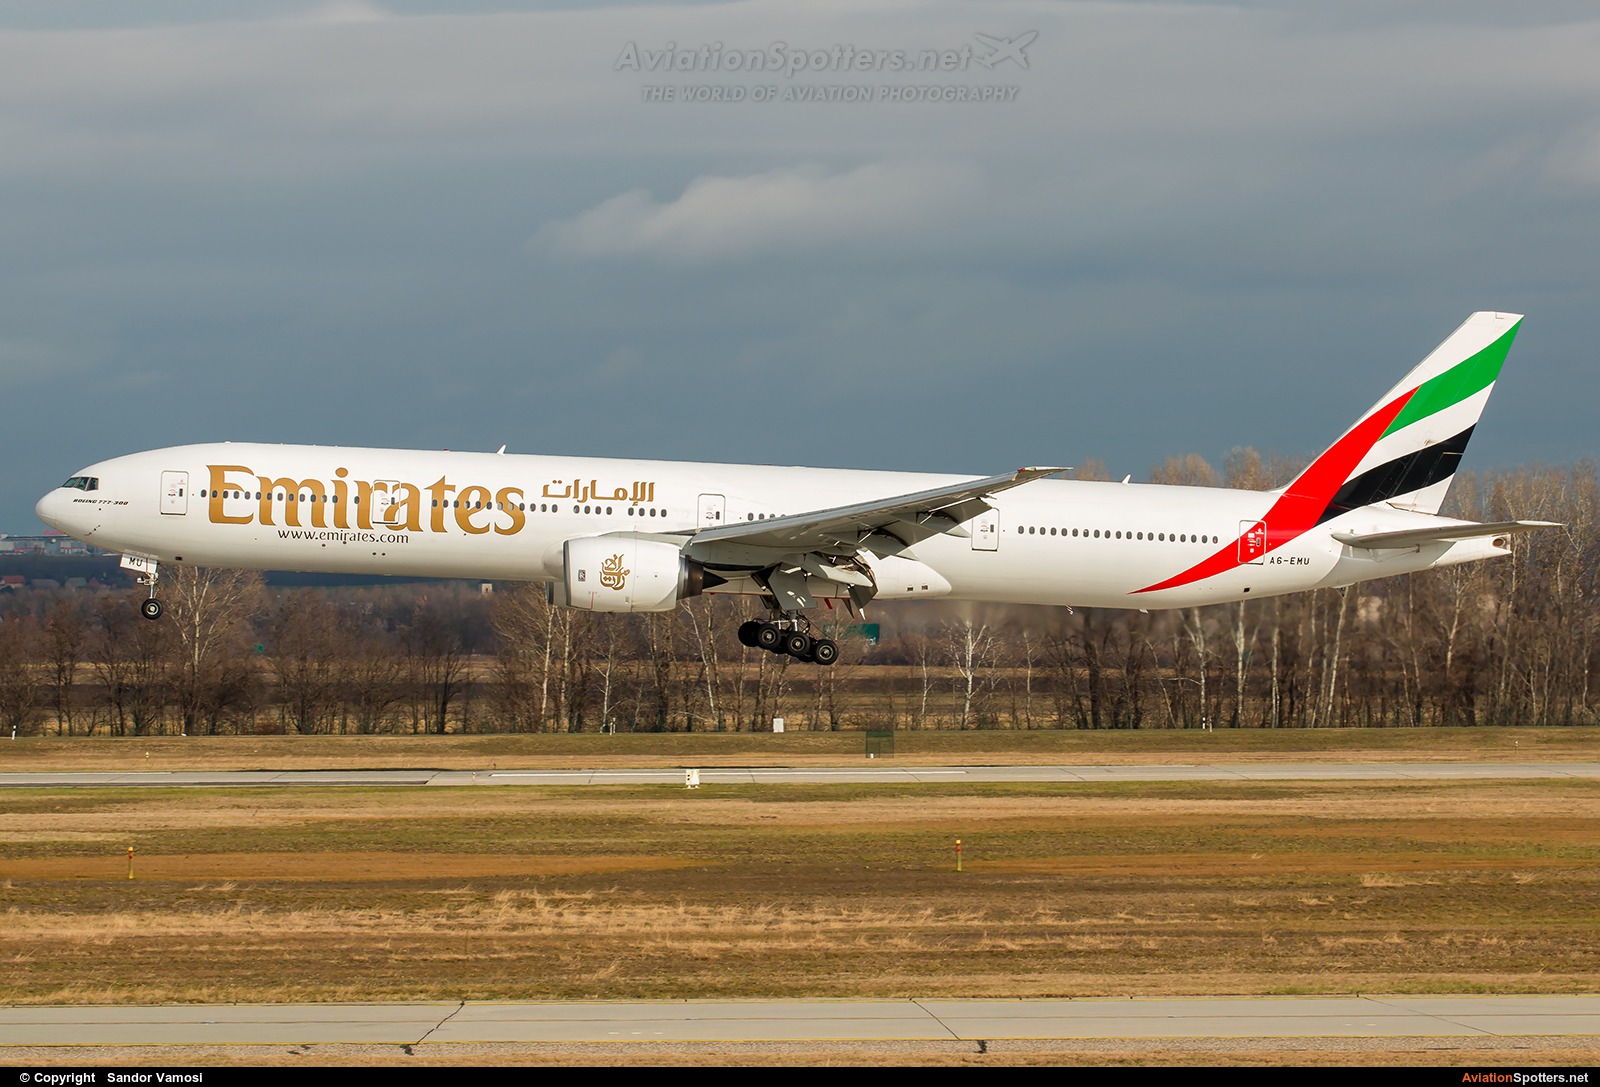 Emirates Airlines  -  777-300  (A6-EMU) By Sandor Vamosi (ALEX67)